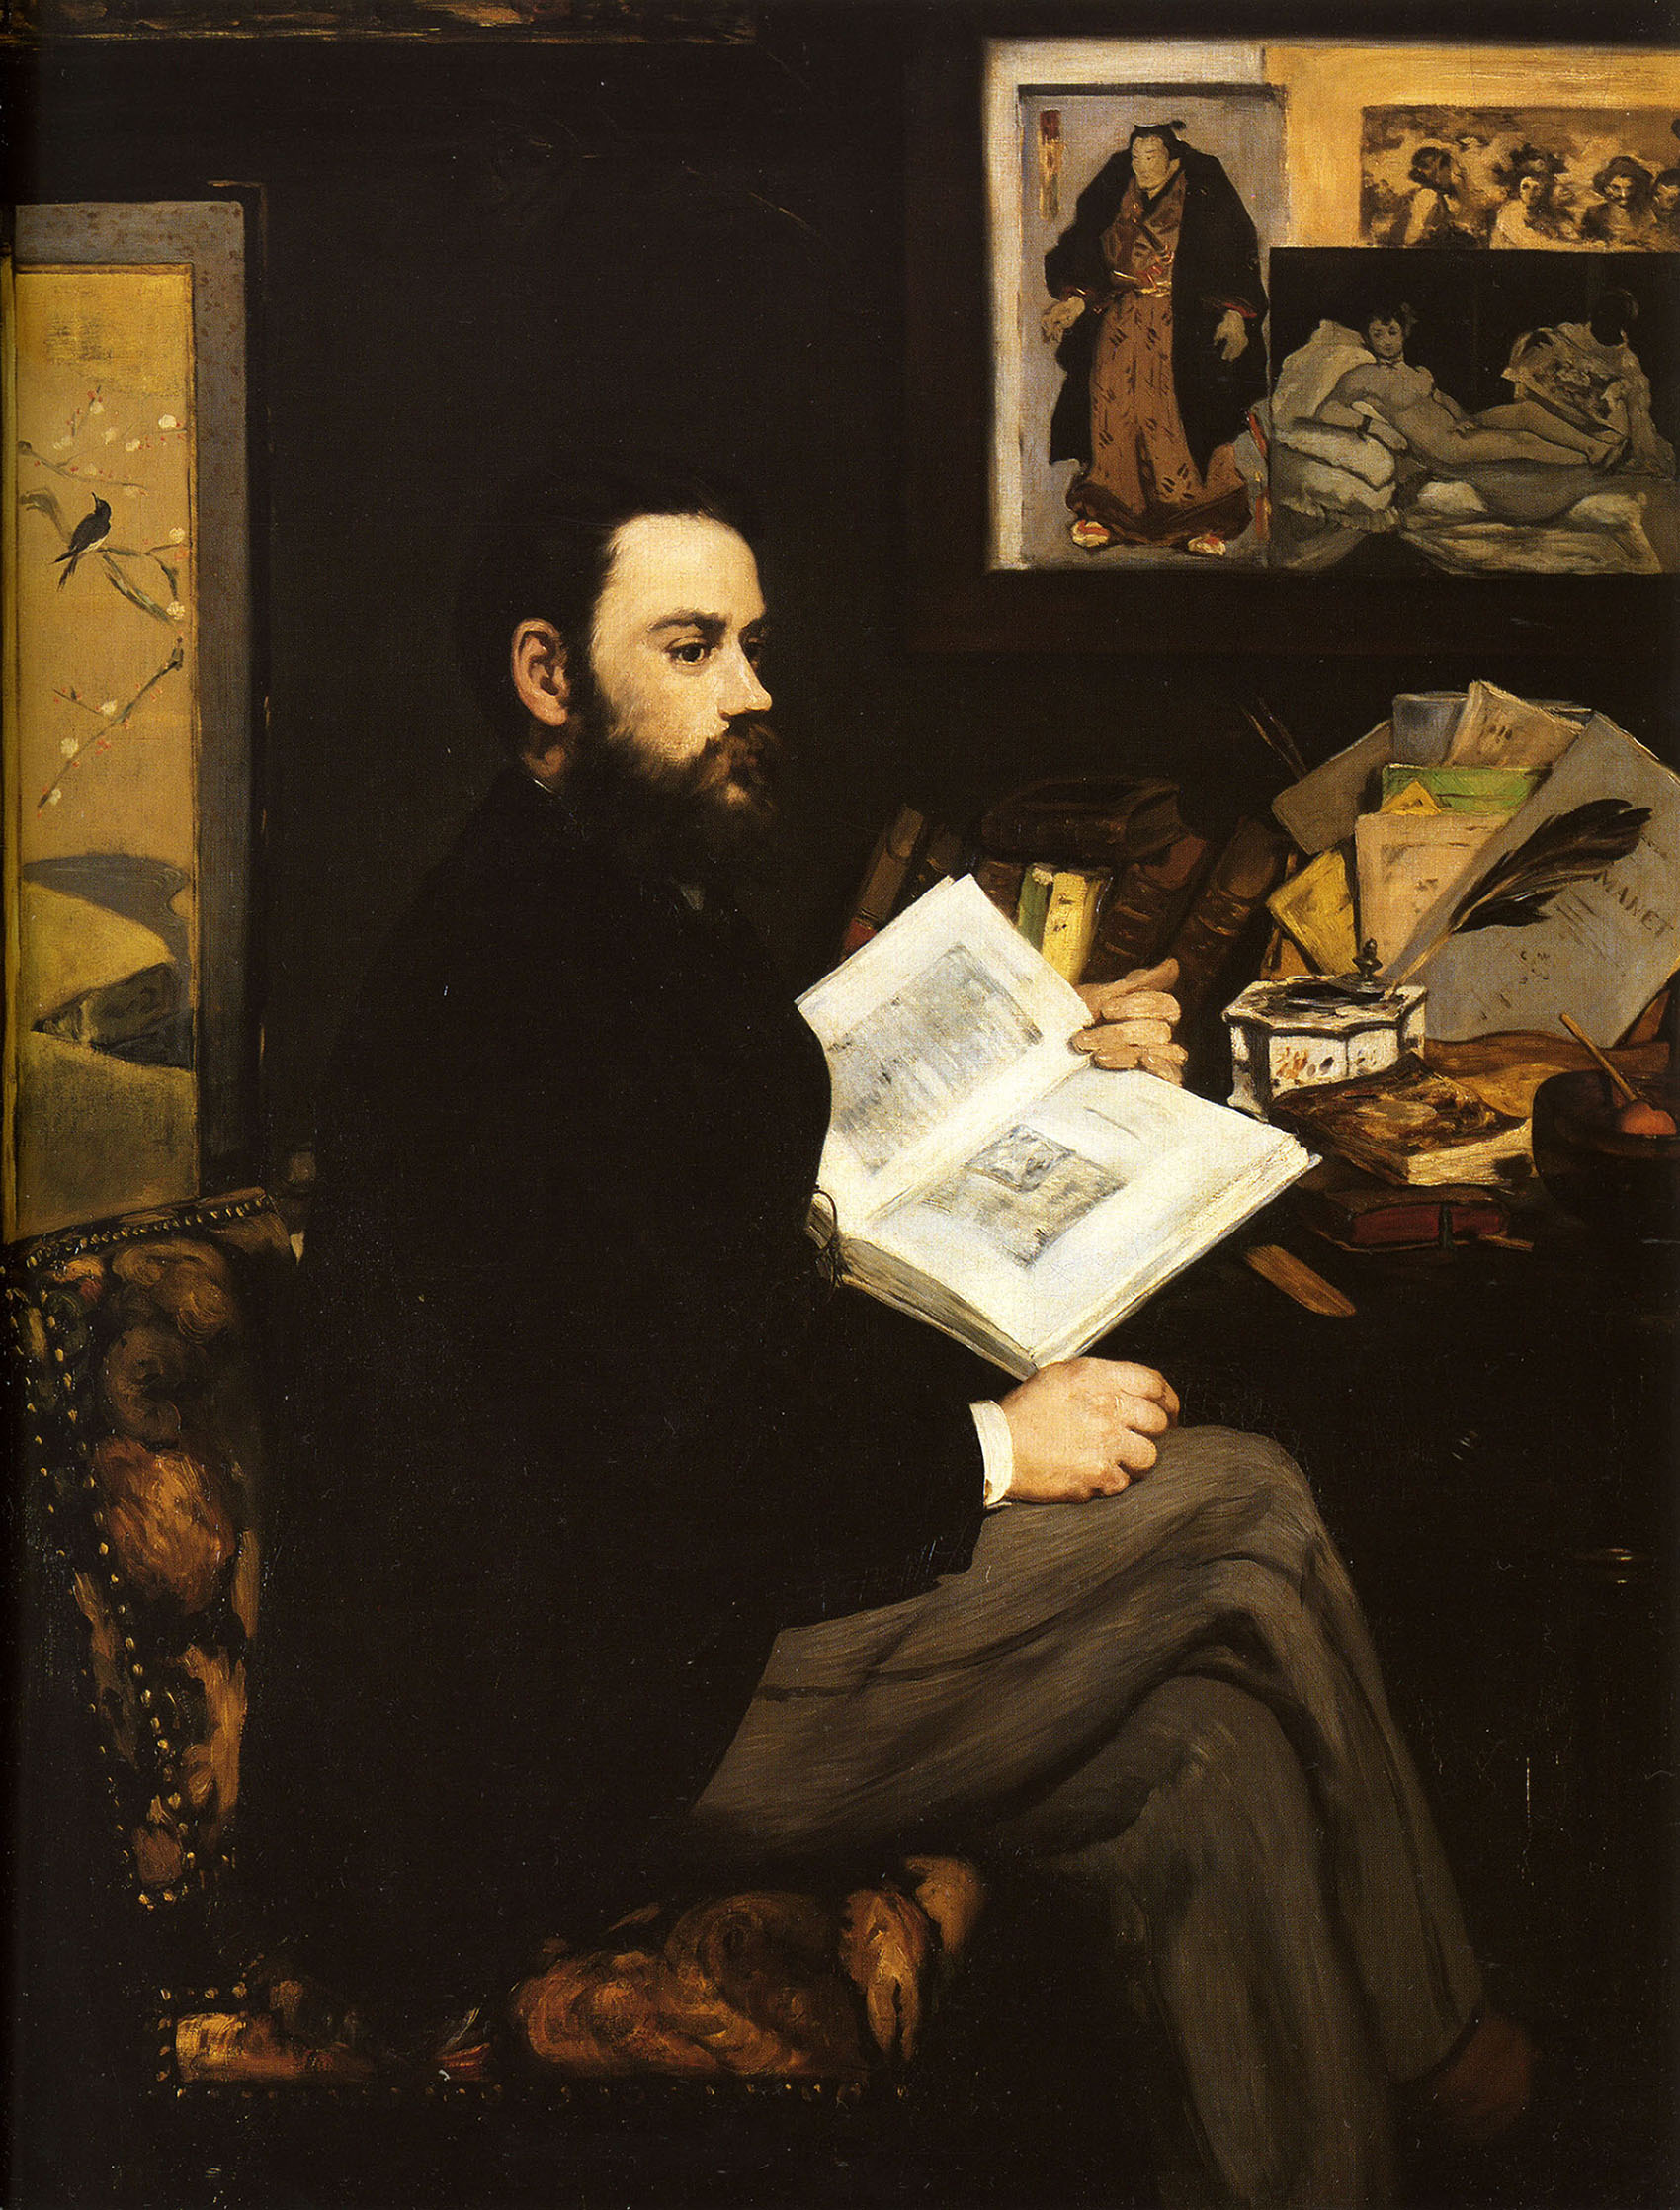 Эдуард Мане. "Портрет Эмиля Золя". 1868.